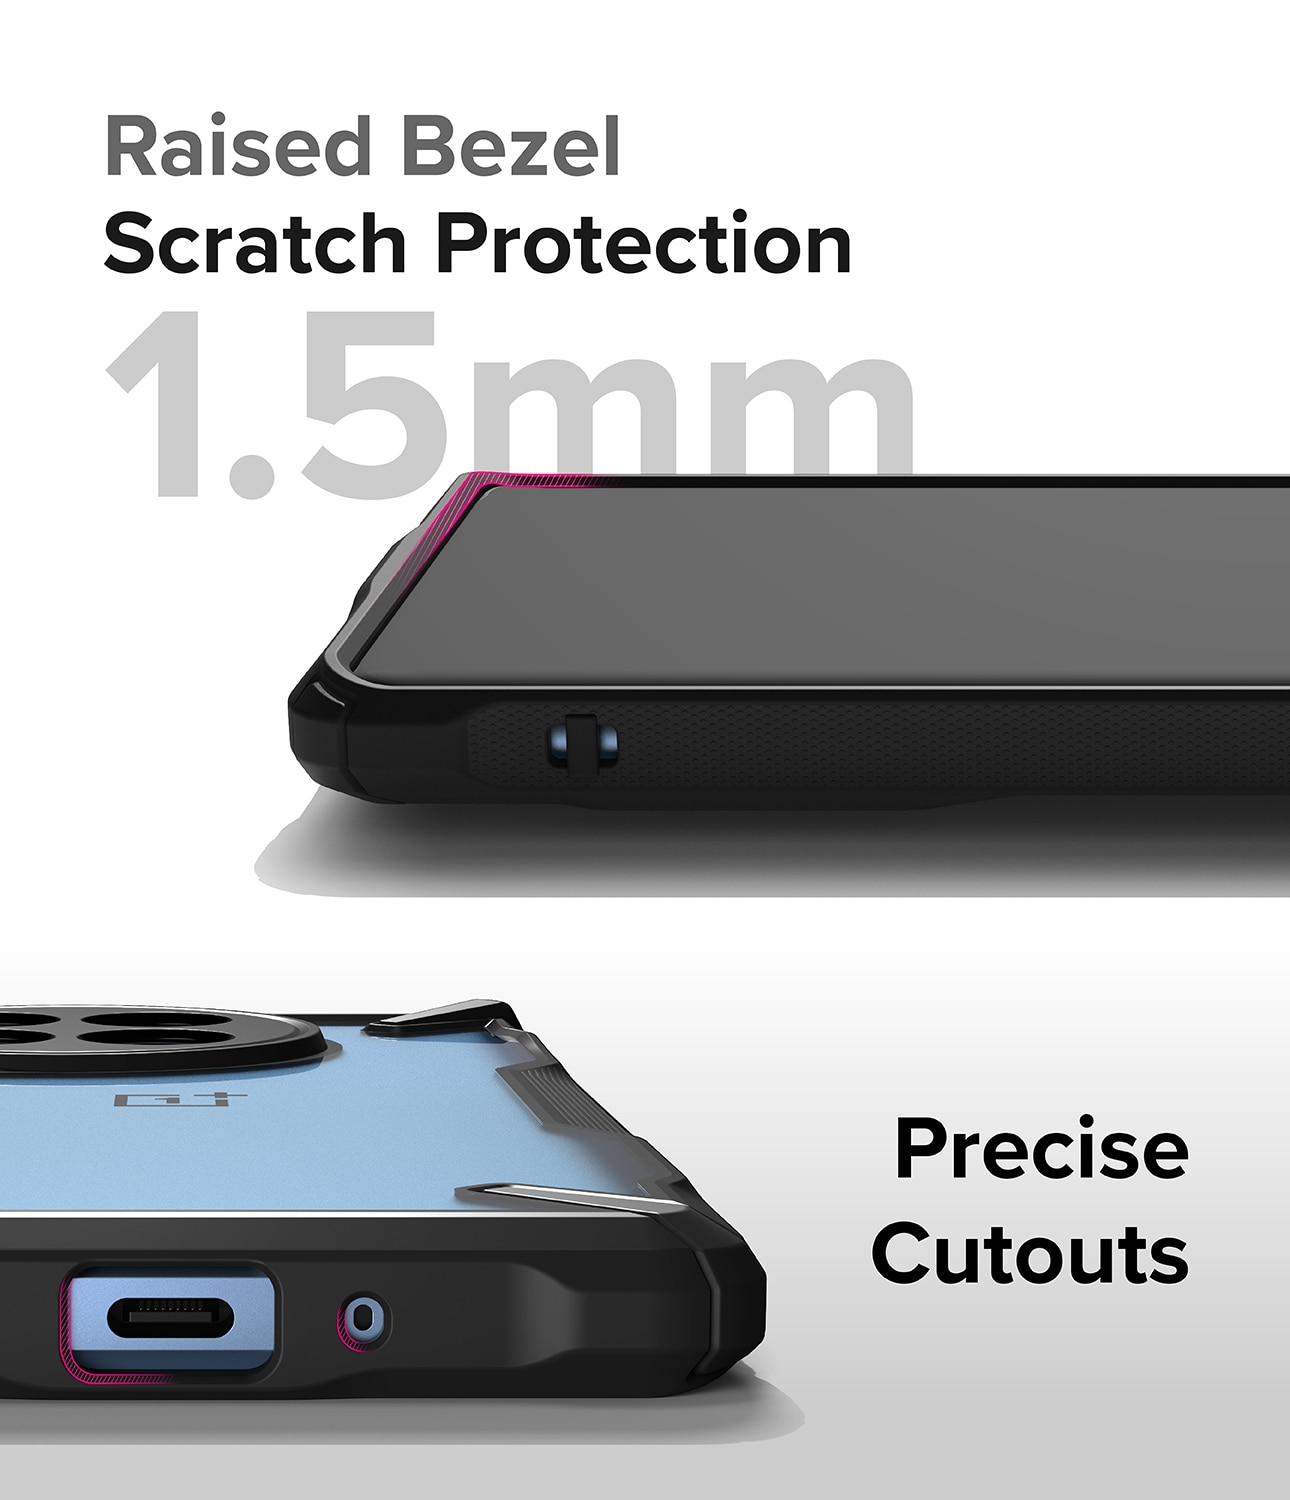 Funda Fusion X OnePlus 12R negro